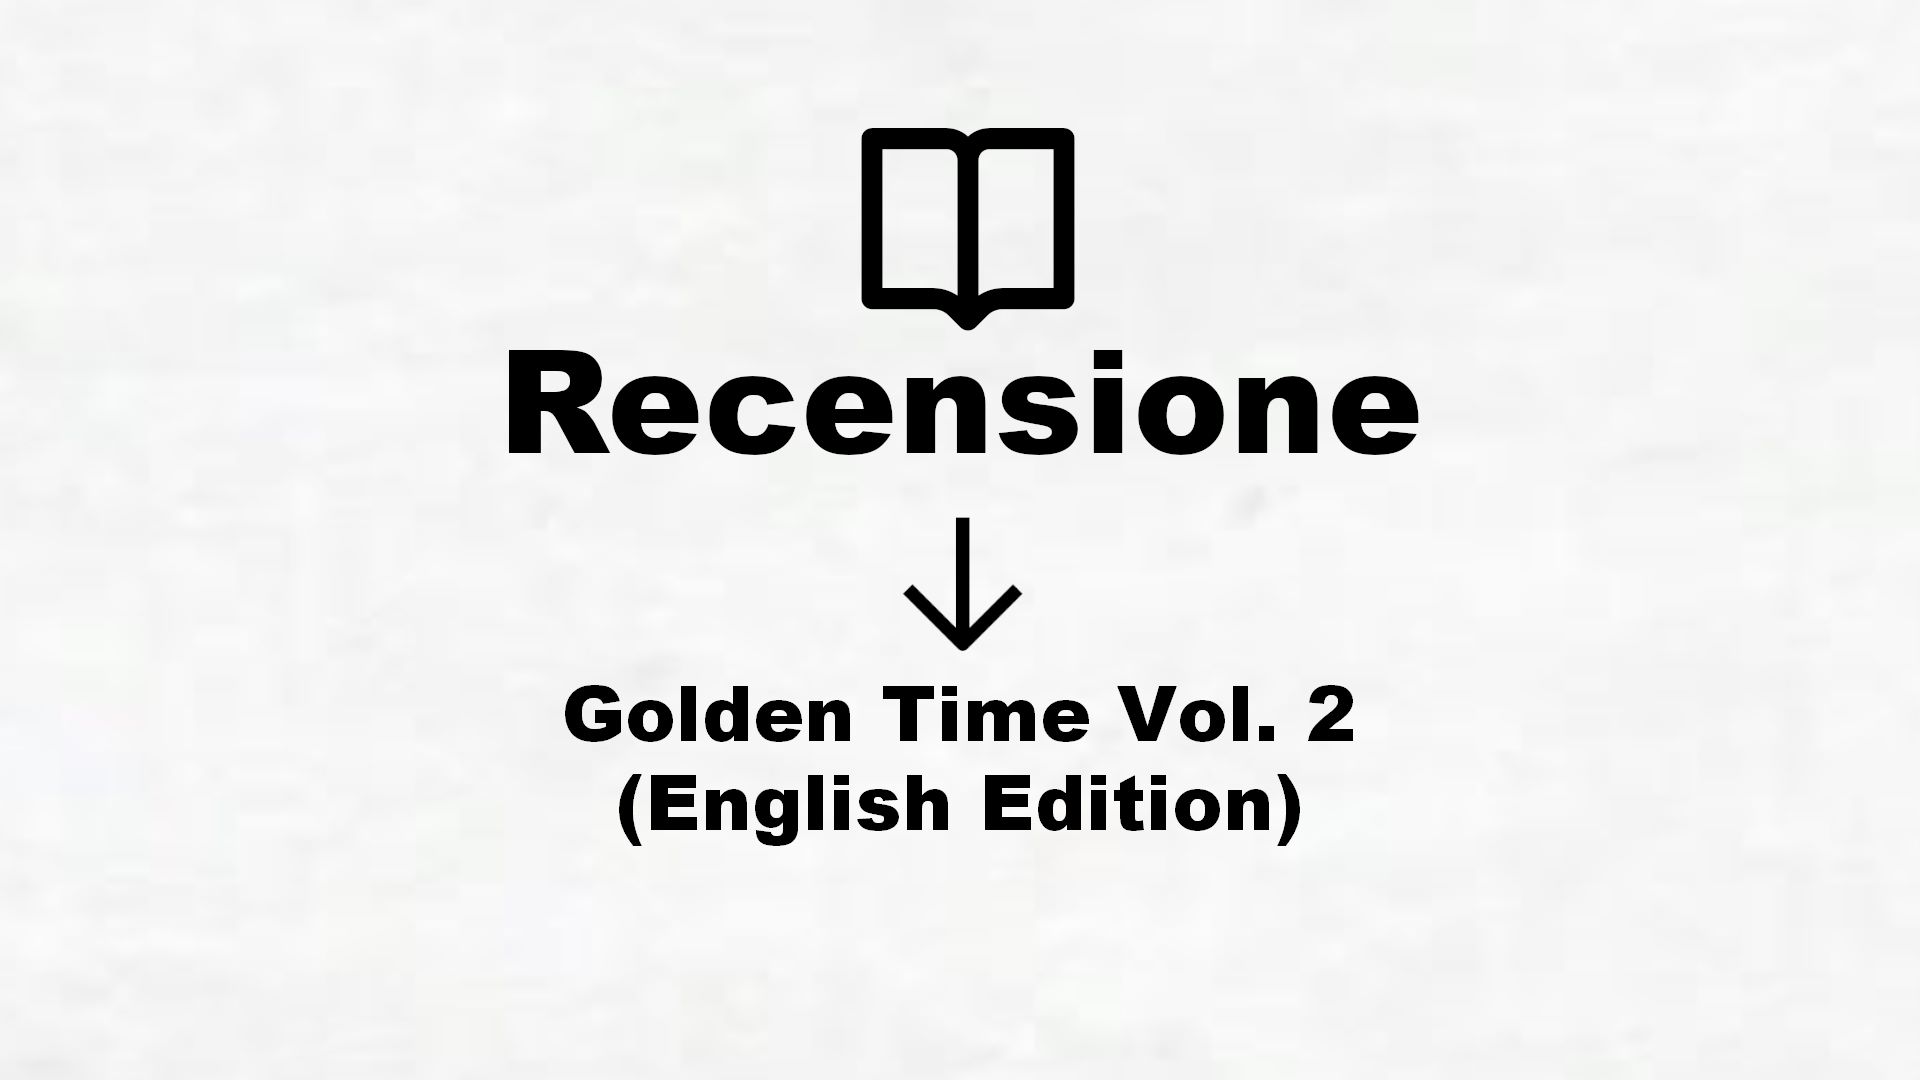 Golden Time Vol. 2 (English Edition) – Recensione Libro